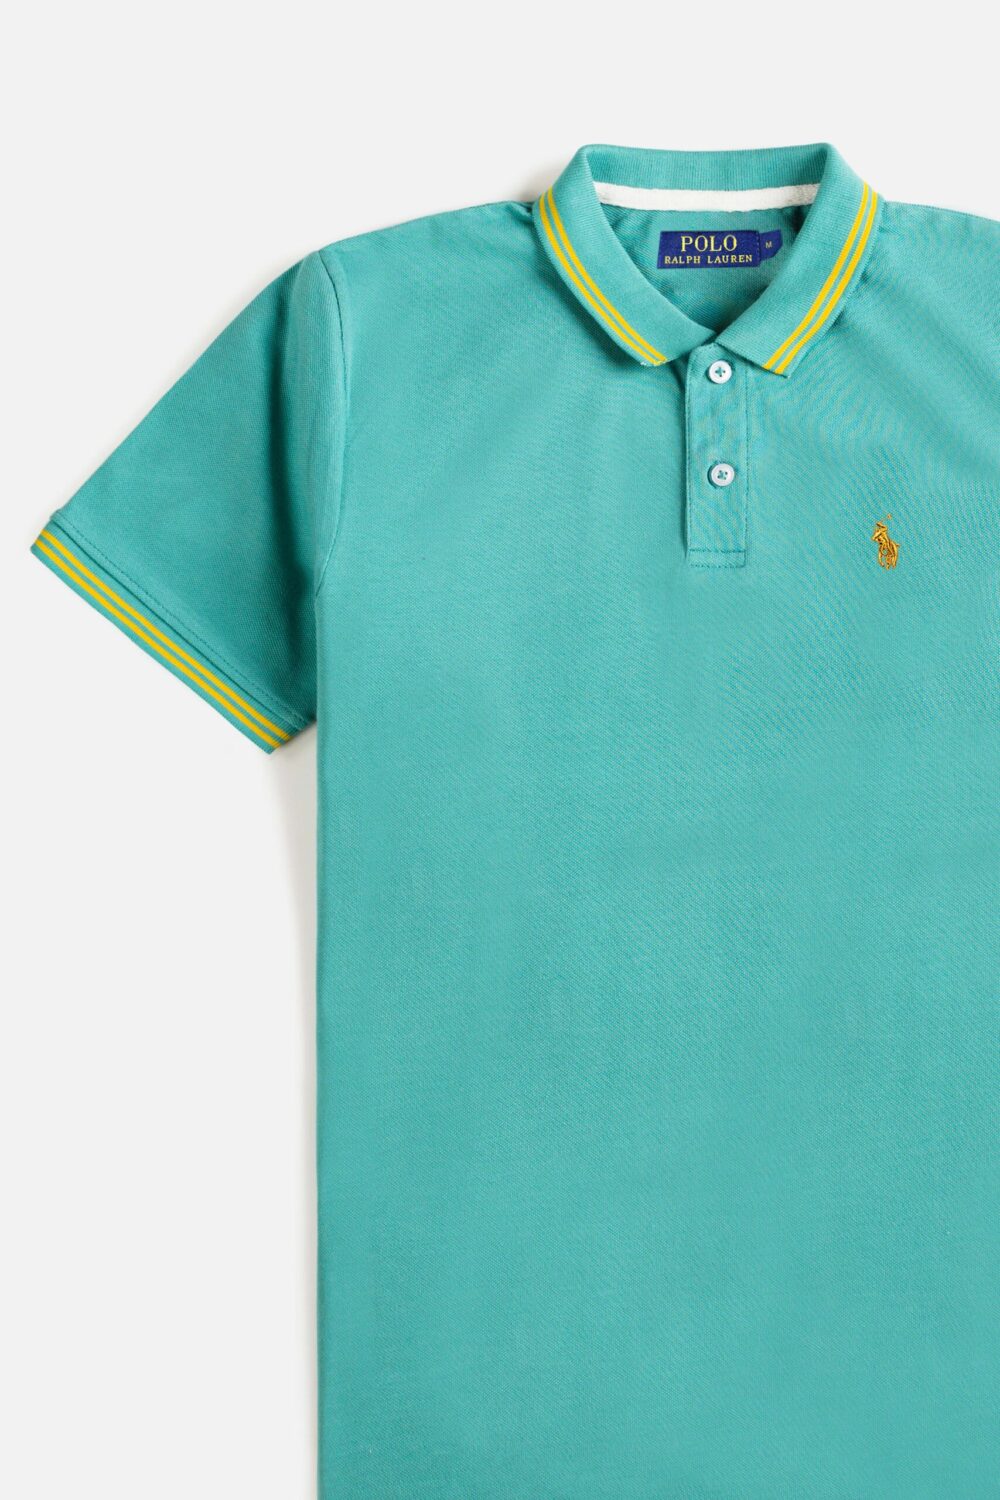 RL Premium Tipping Polo Shirt – Turquoise